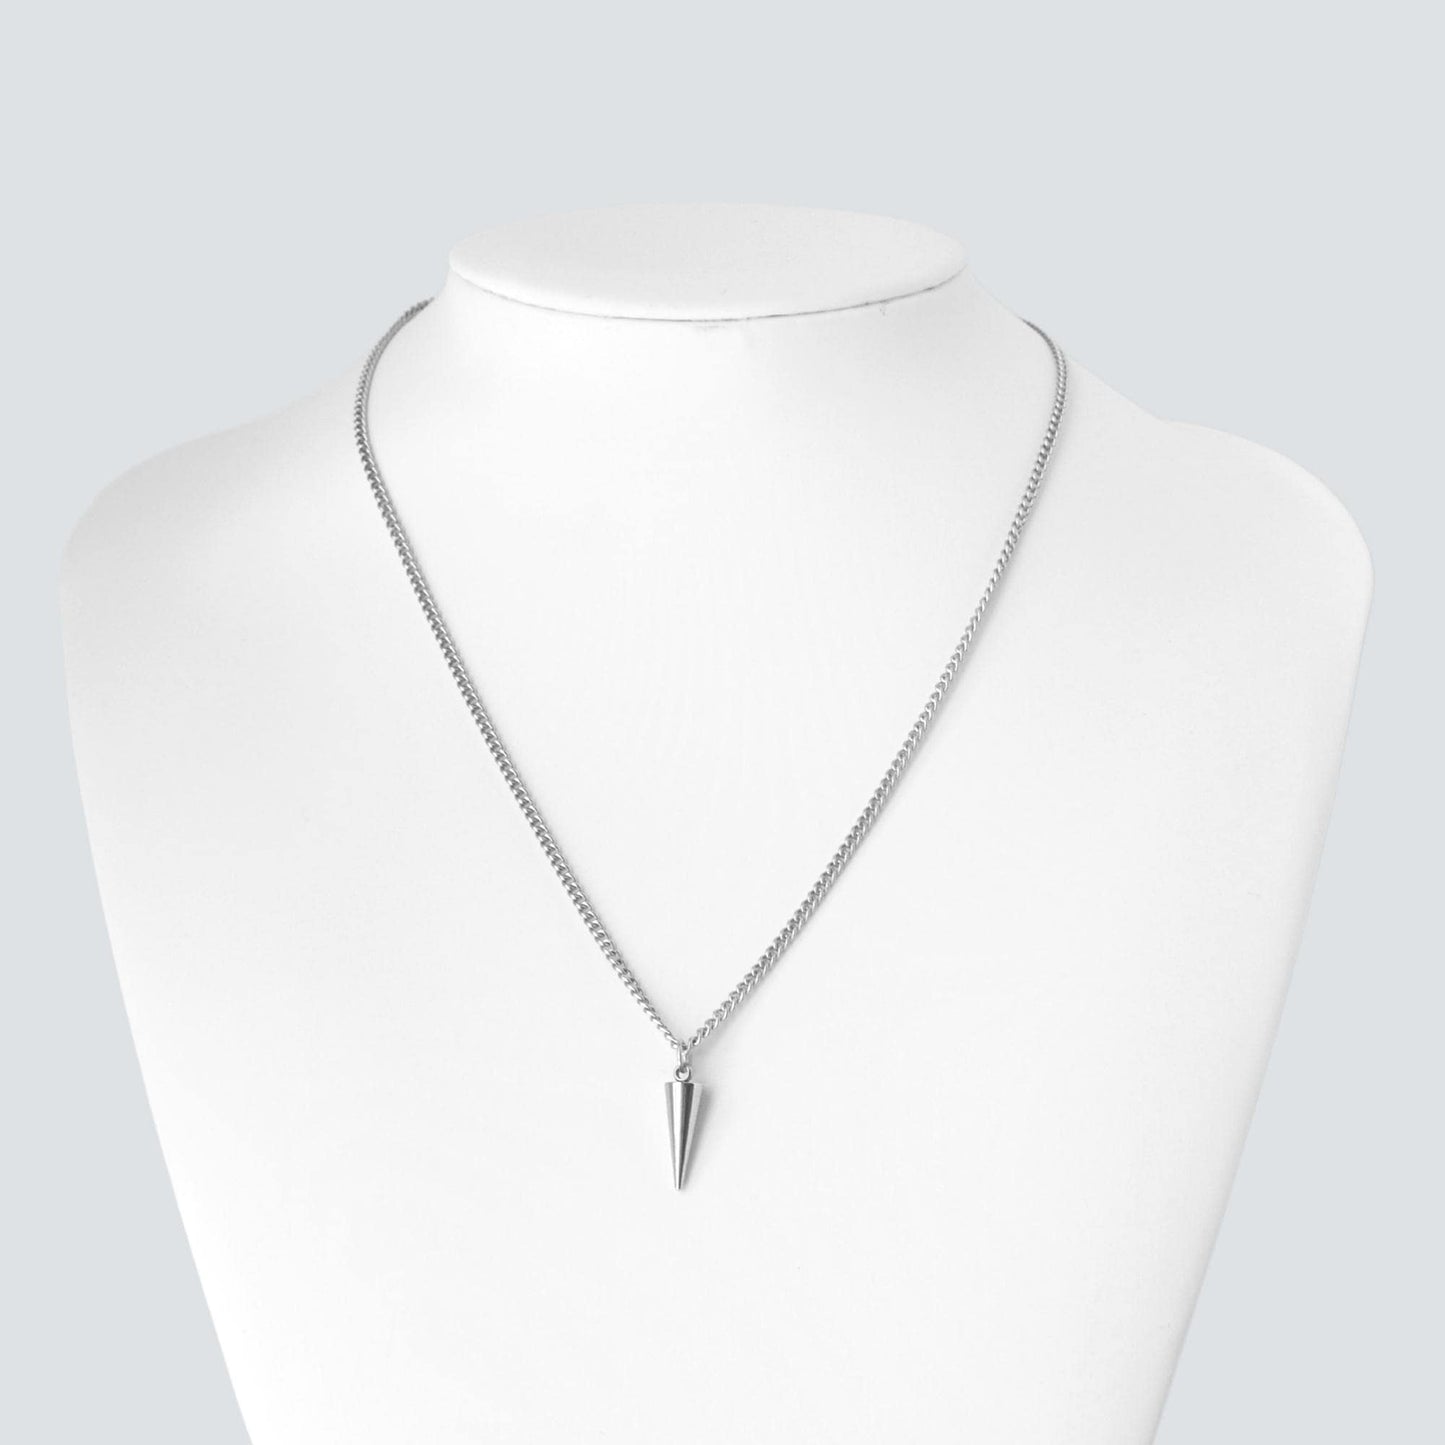 Silver Spike Pendant Necklace For Men or Women - Necklace - Boutique Wear RENN